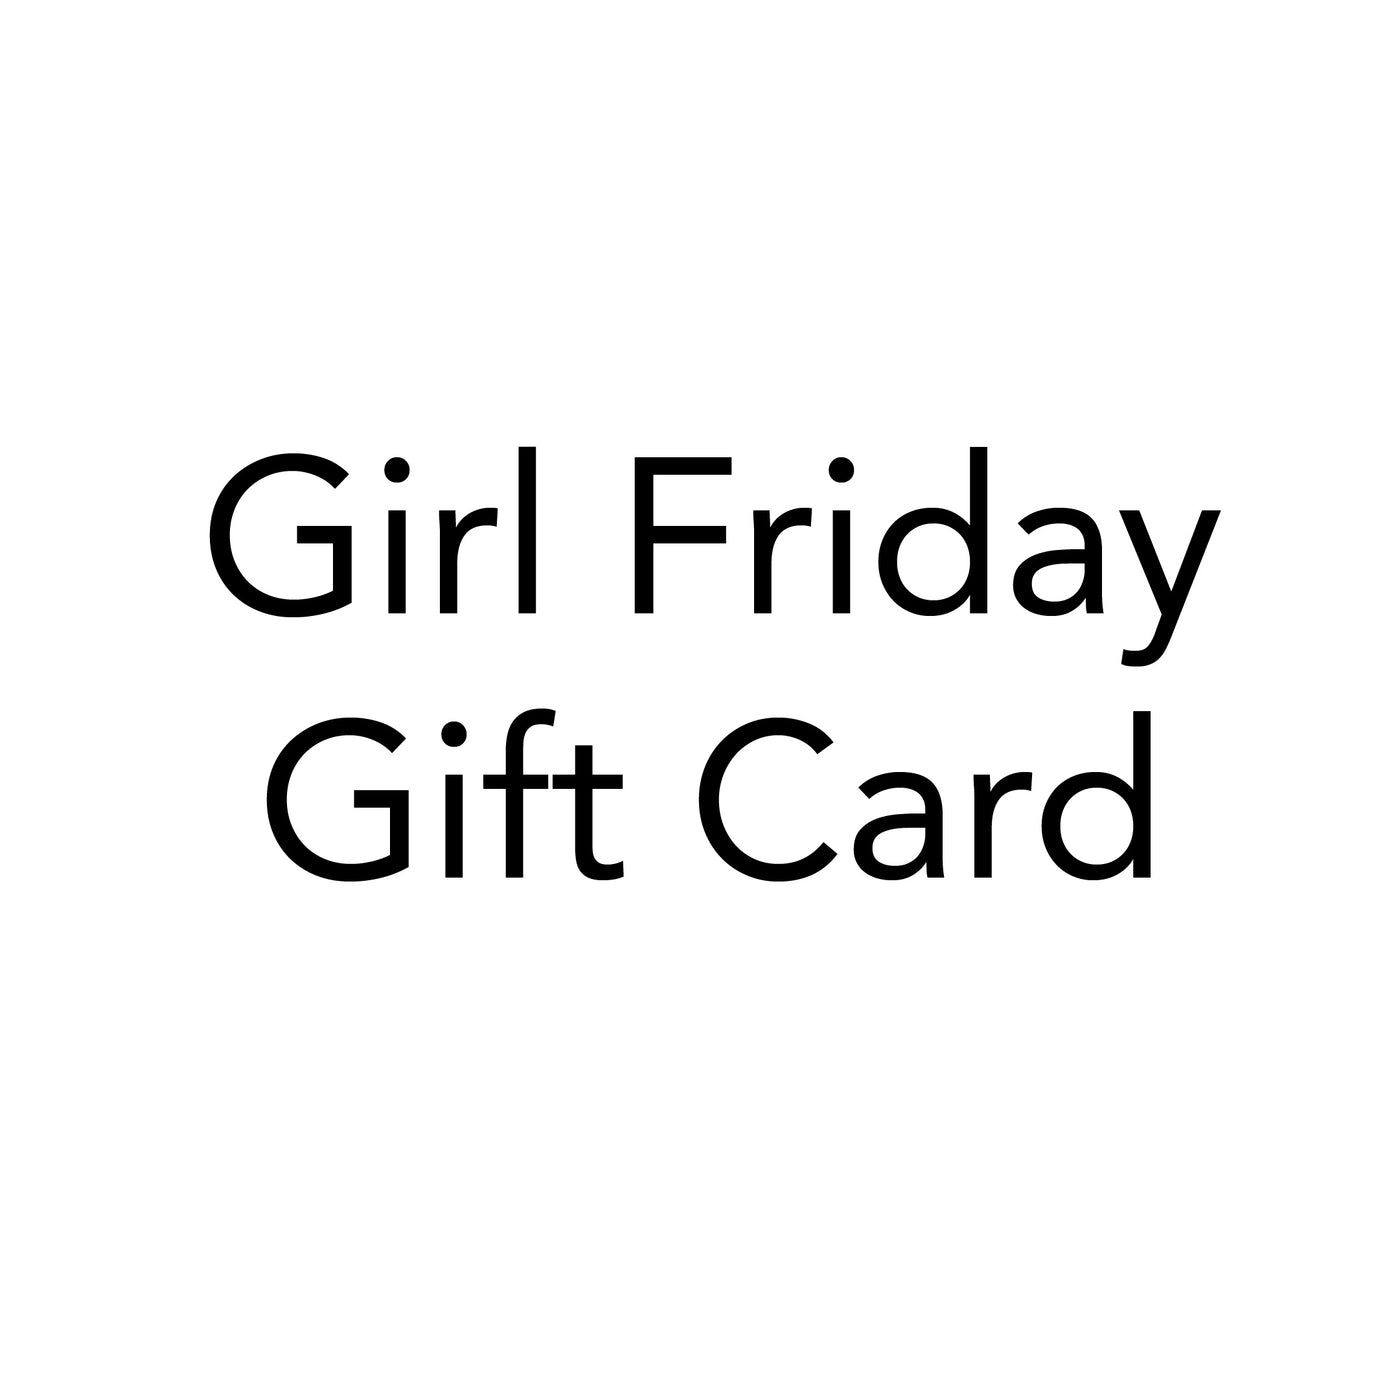 Girl Friday Gift Card